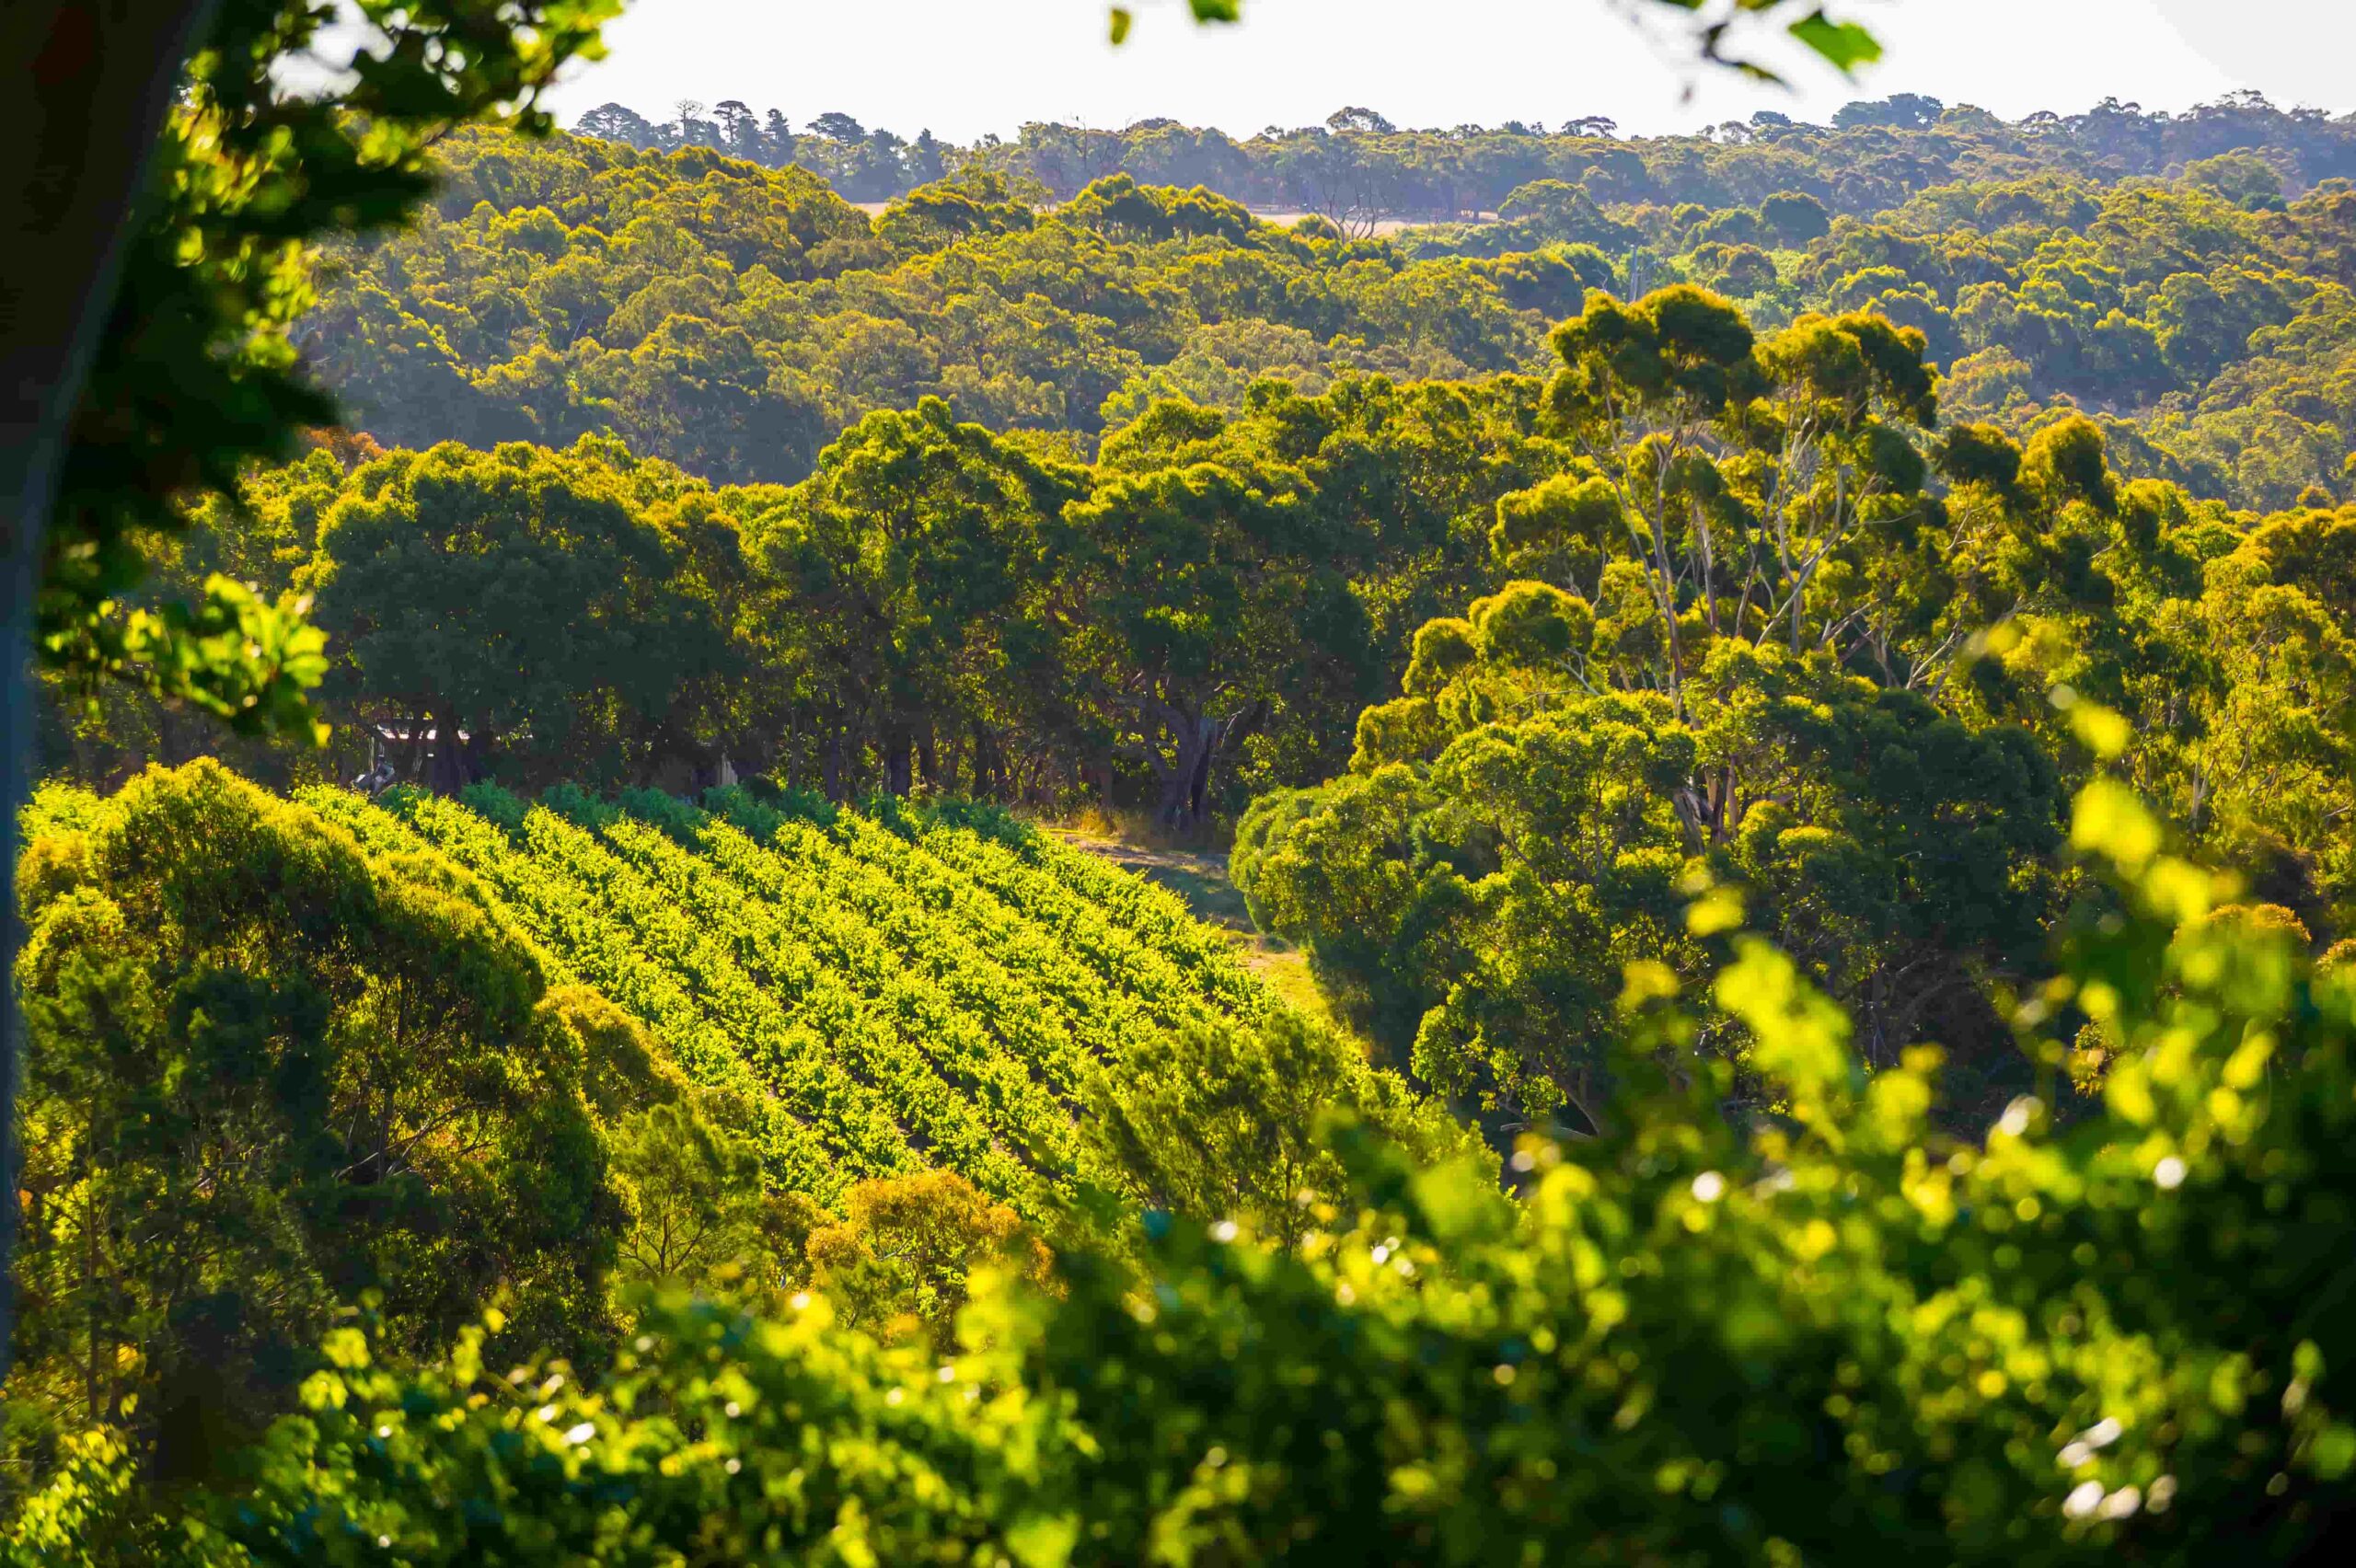 A vineyard in the Adelaide Hills wine region